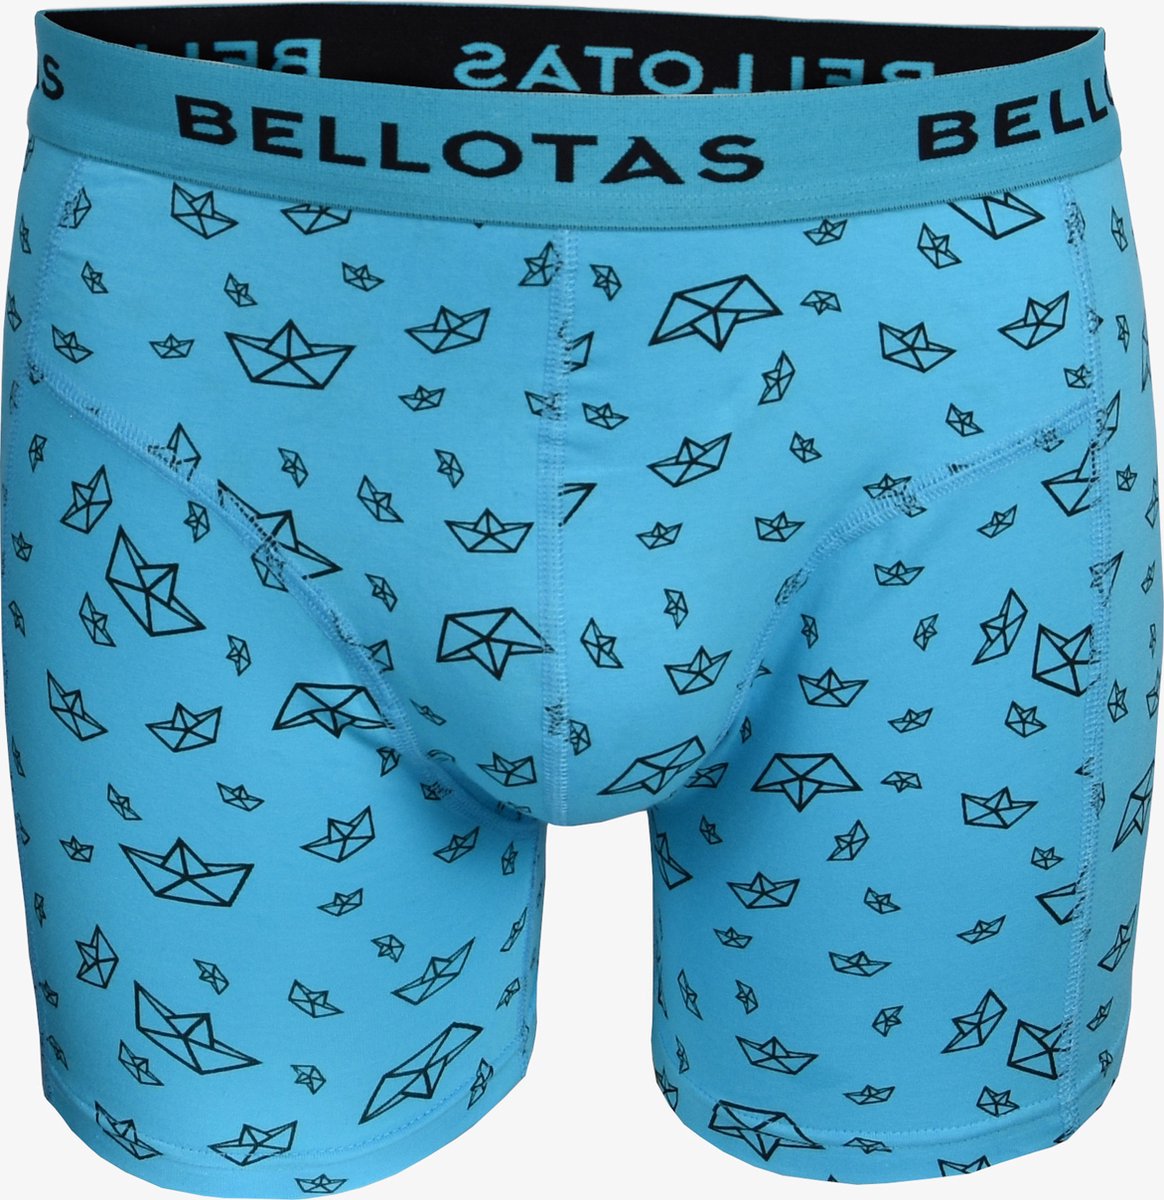 Bellotas - Boxershort - Aster S